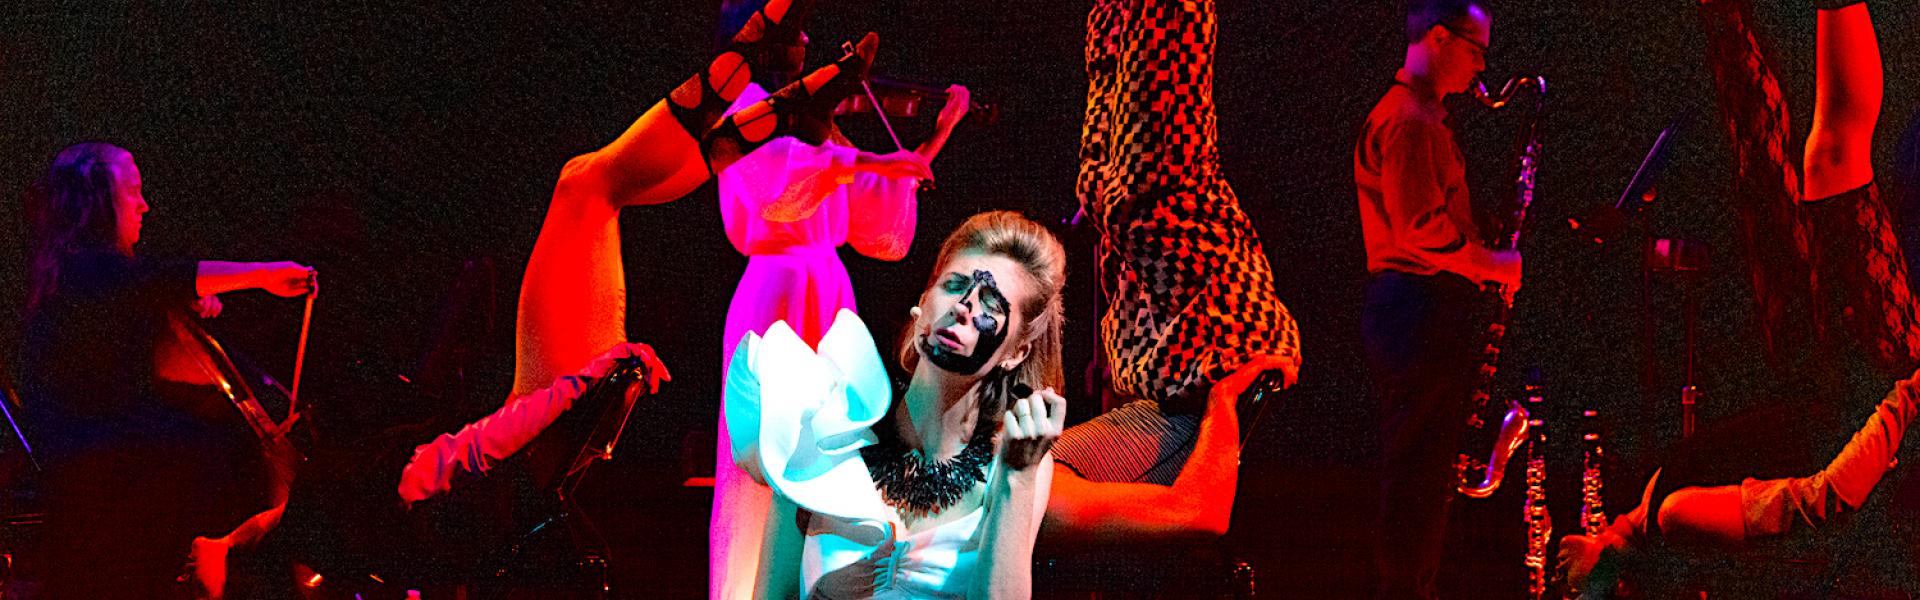 Long Beach Opera - "Pierrot lunaire"